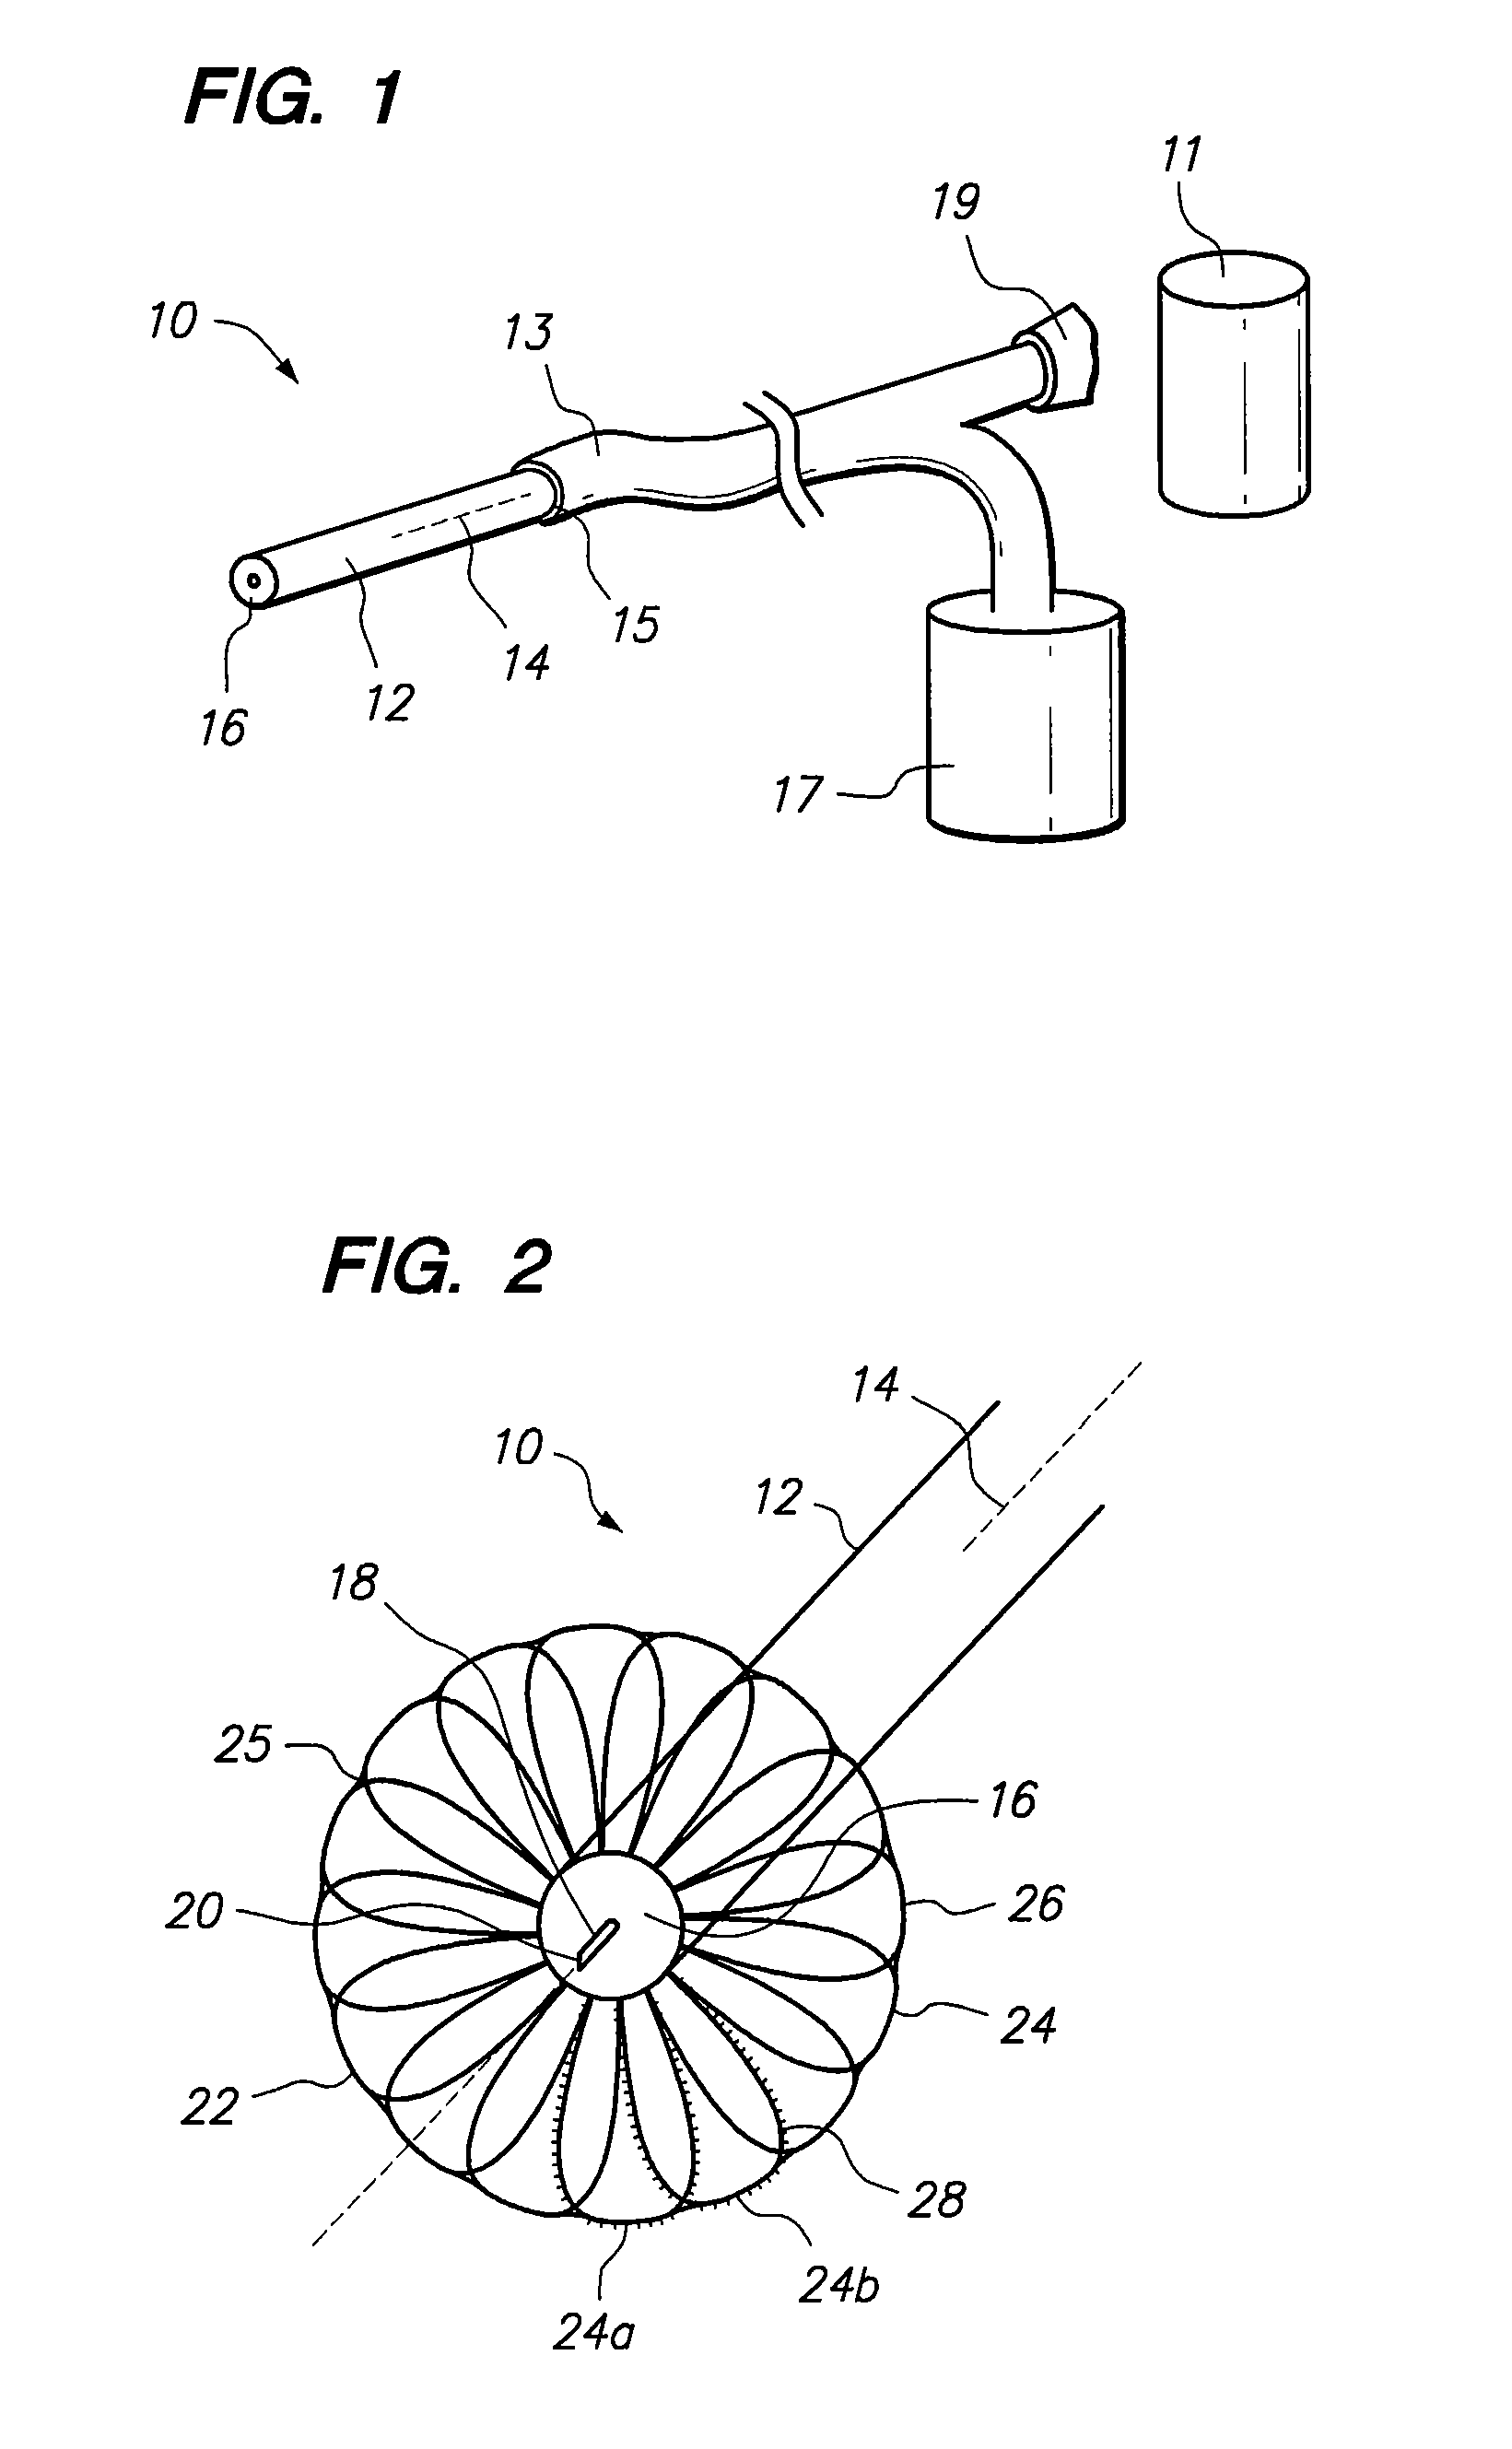 Myocardial injector with balloon abutment